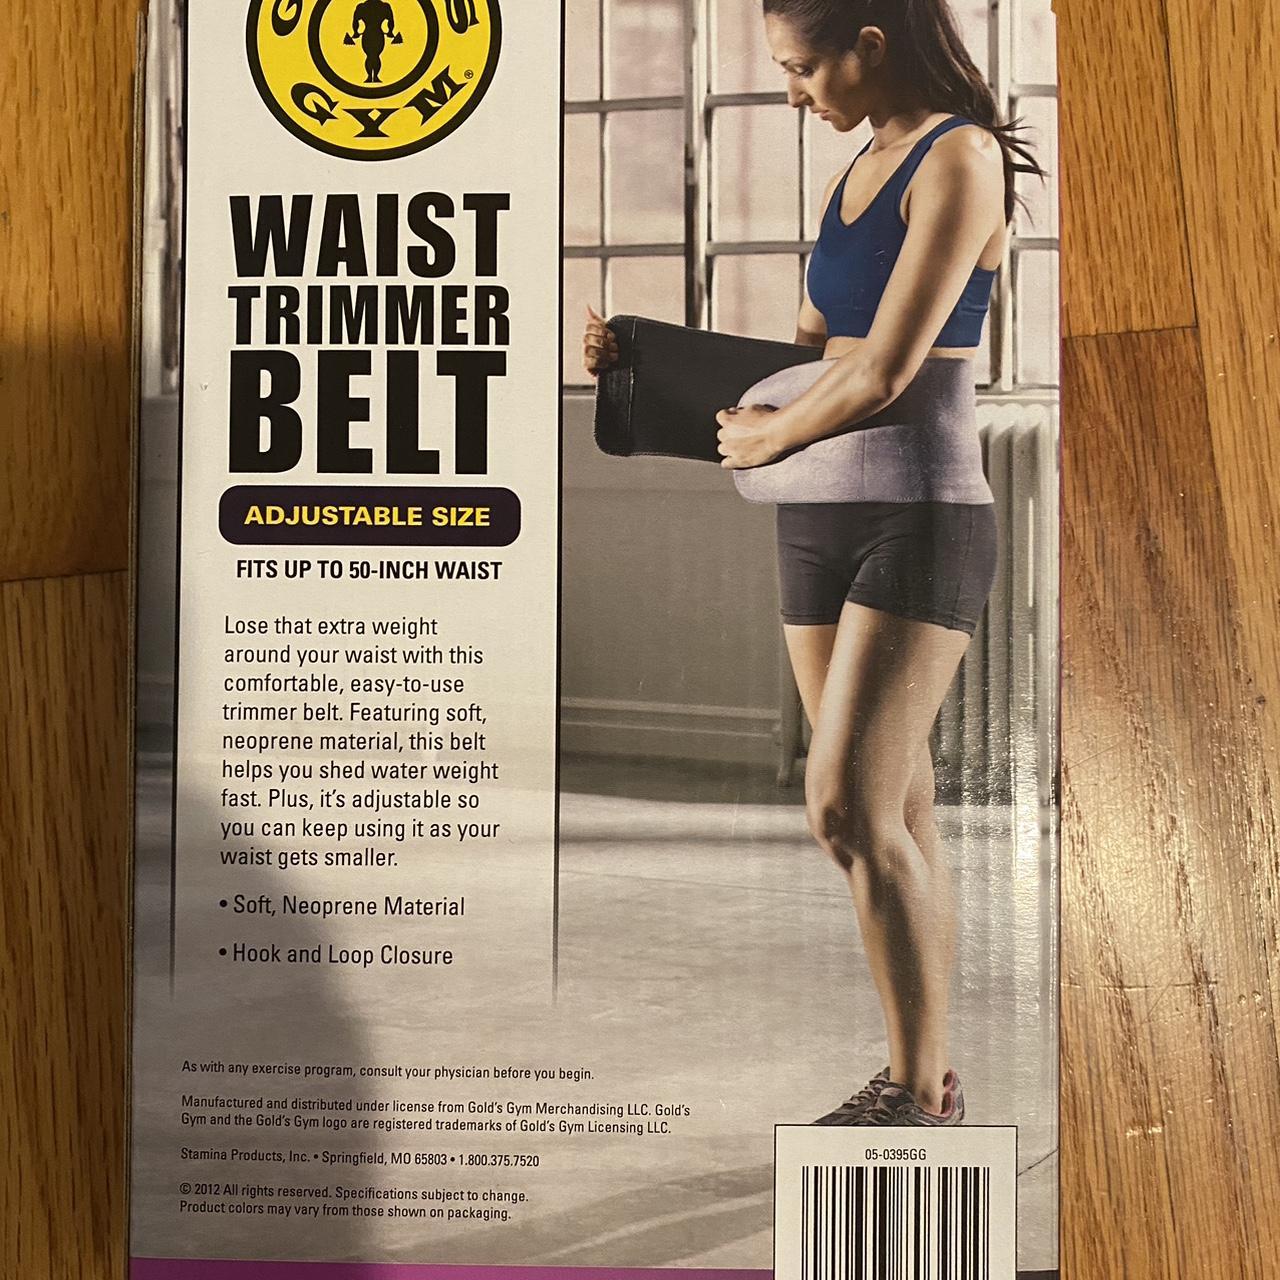 NWTS Gold’s Gym Waist Trimmer Belt. Adjustable, fits